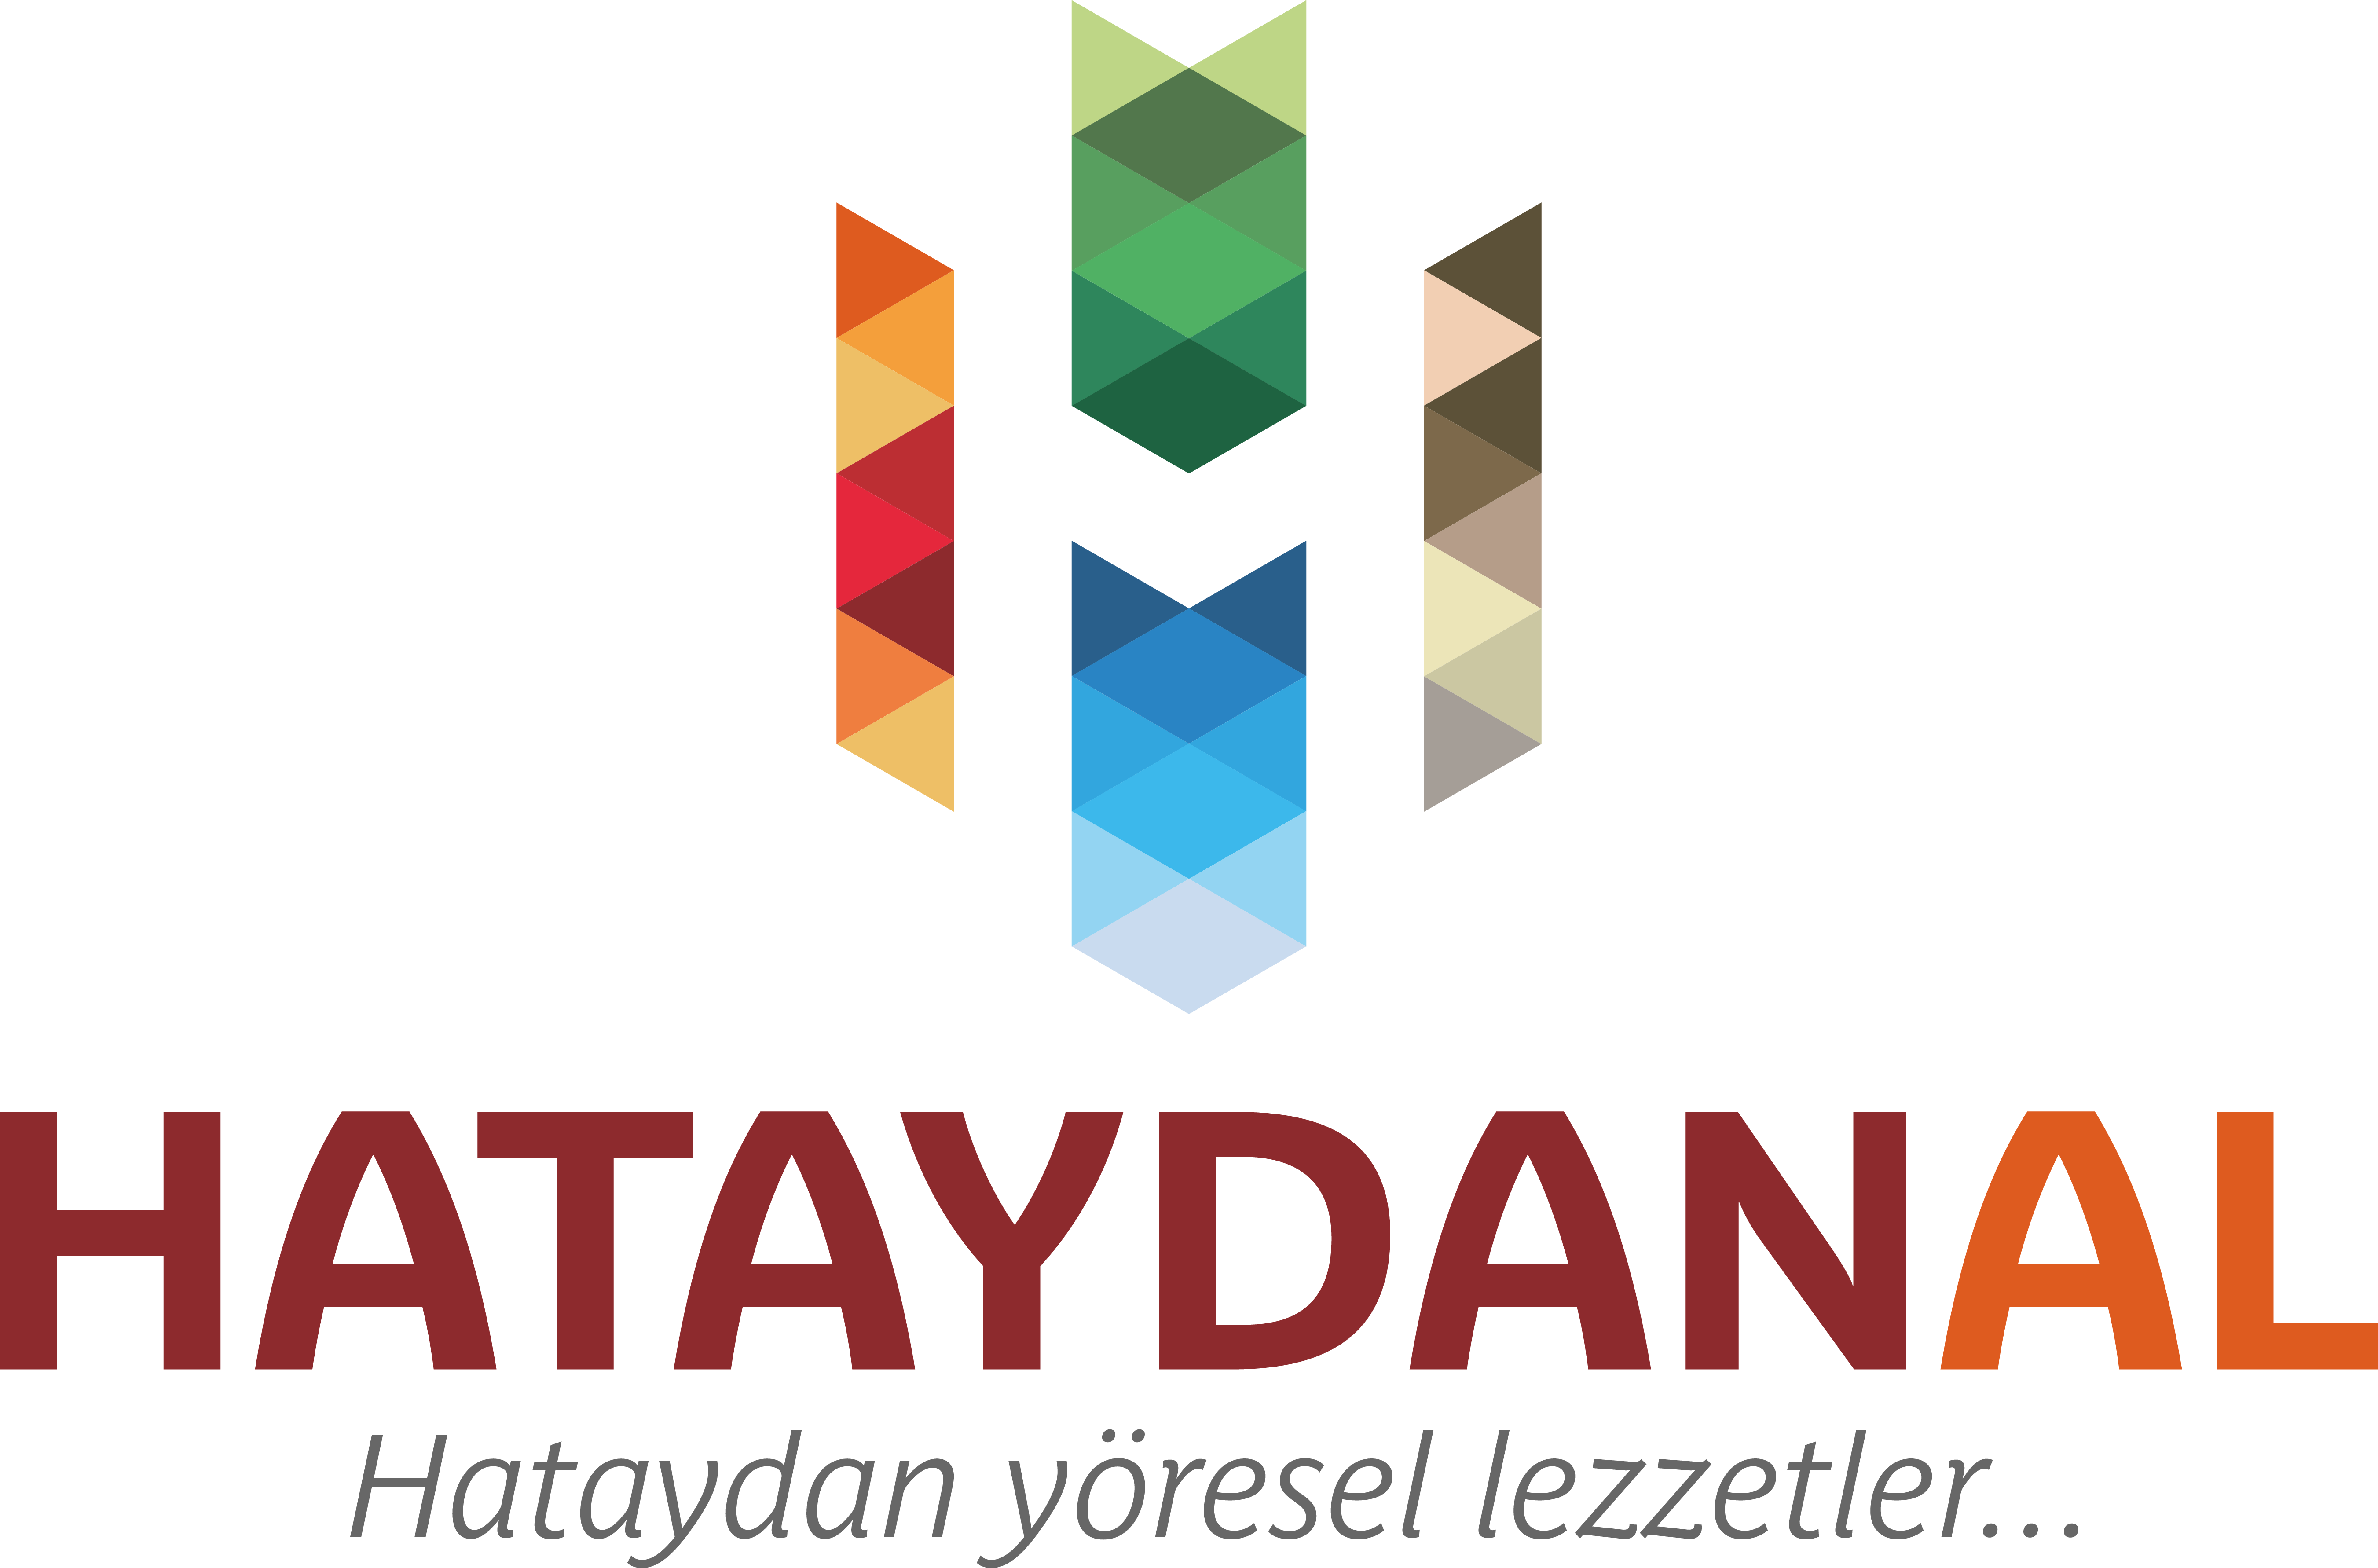 HataydanAL